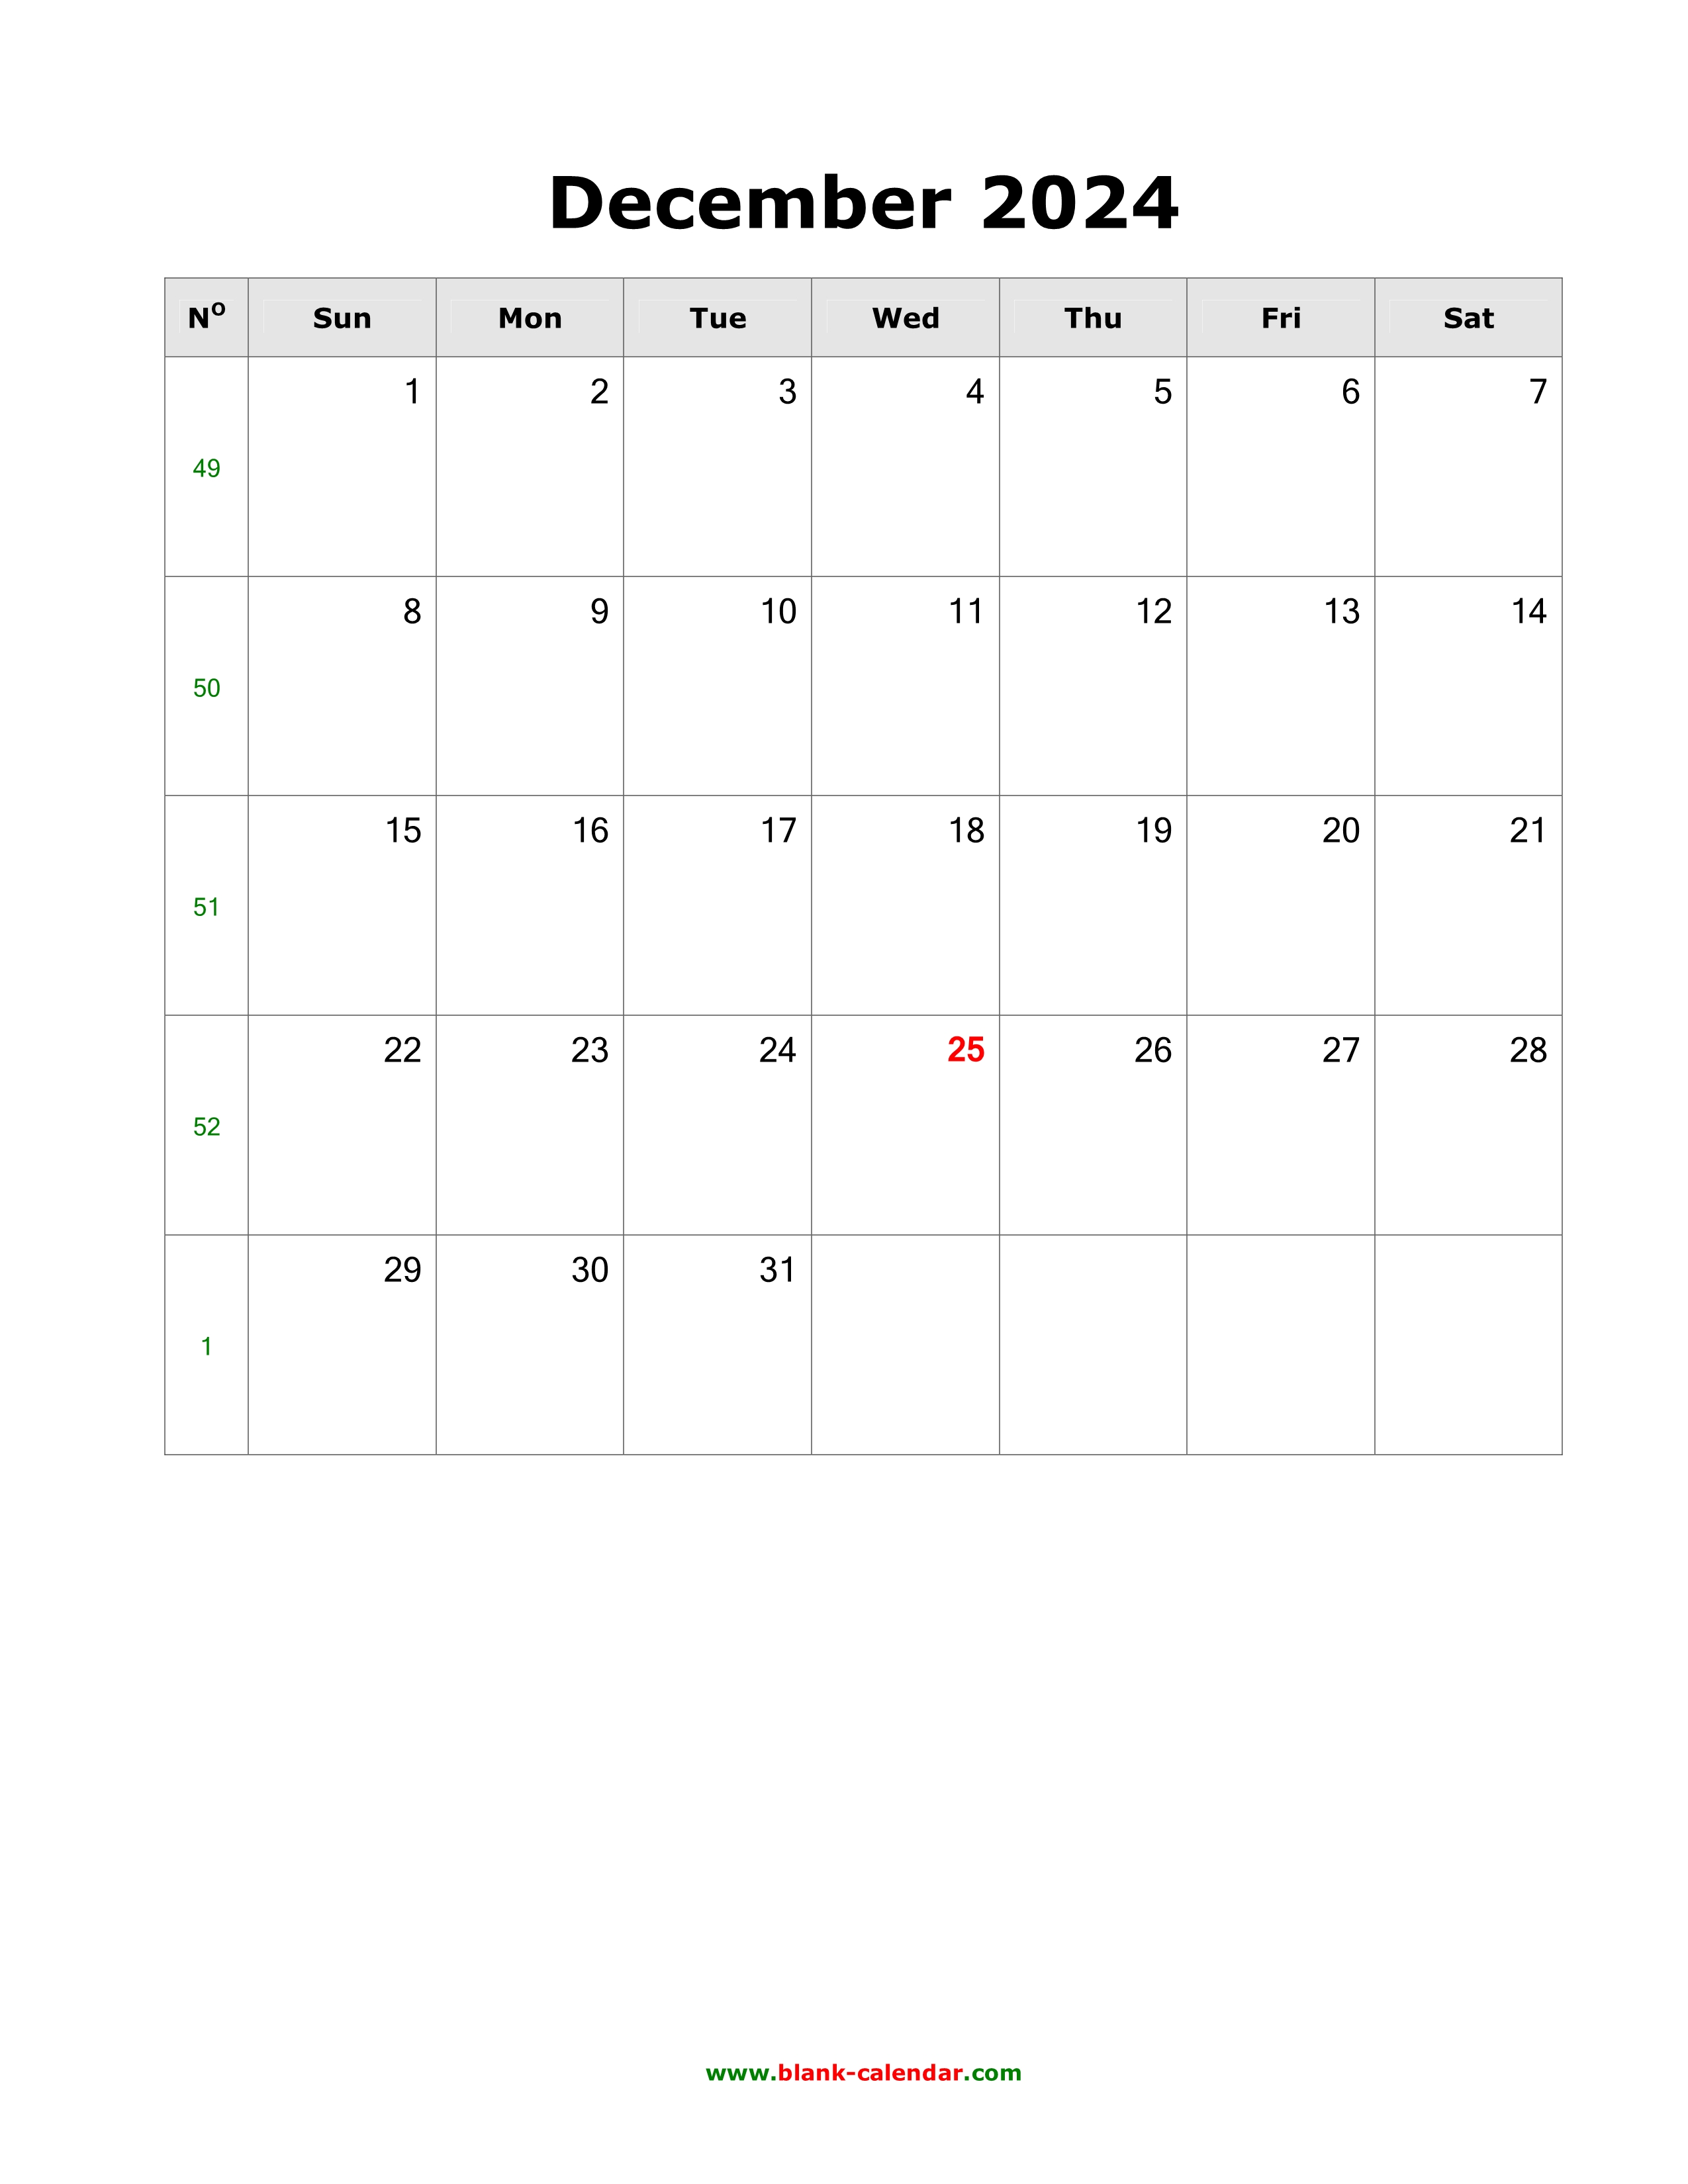 Download December 2024 Blank Calendar (vertical)